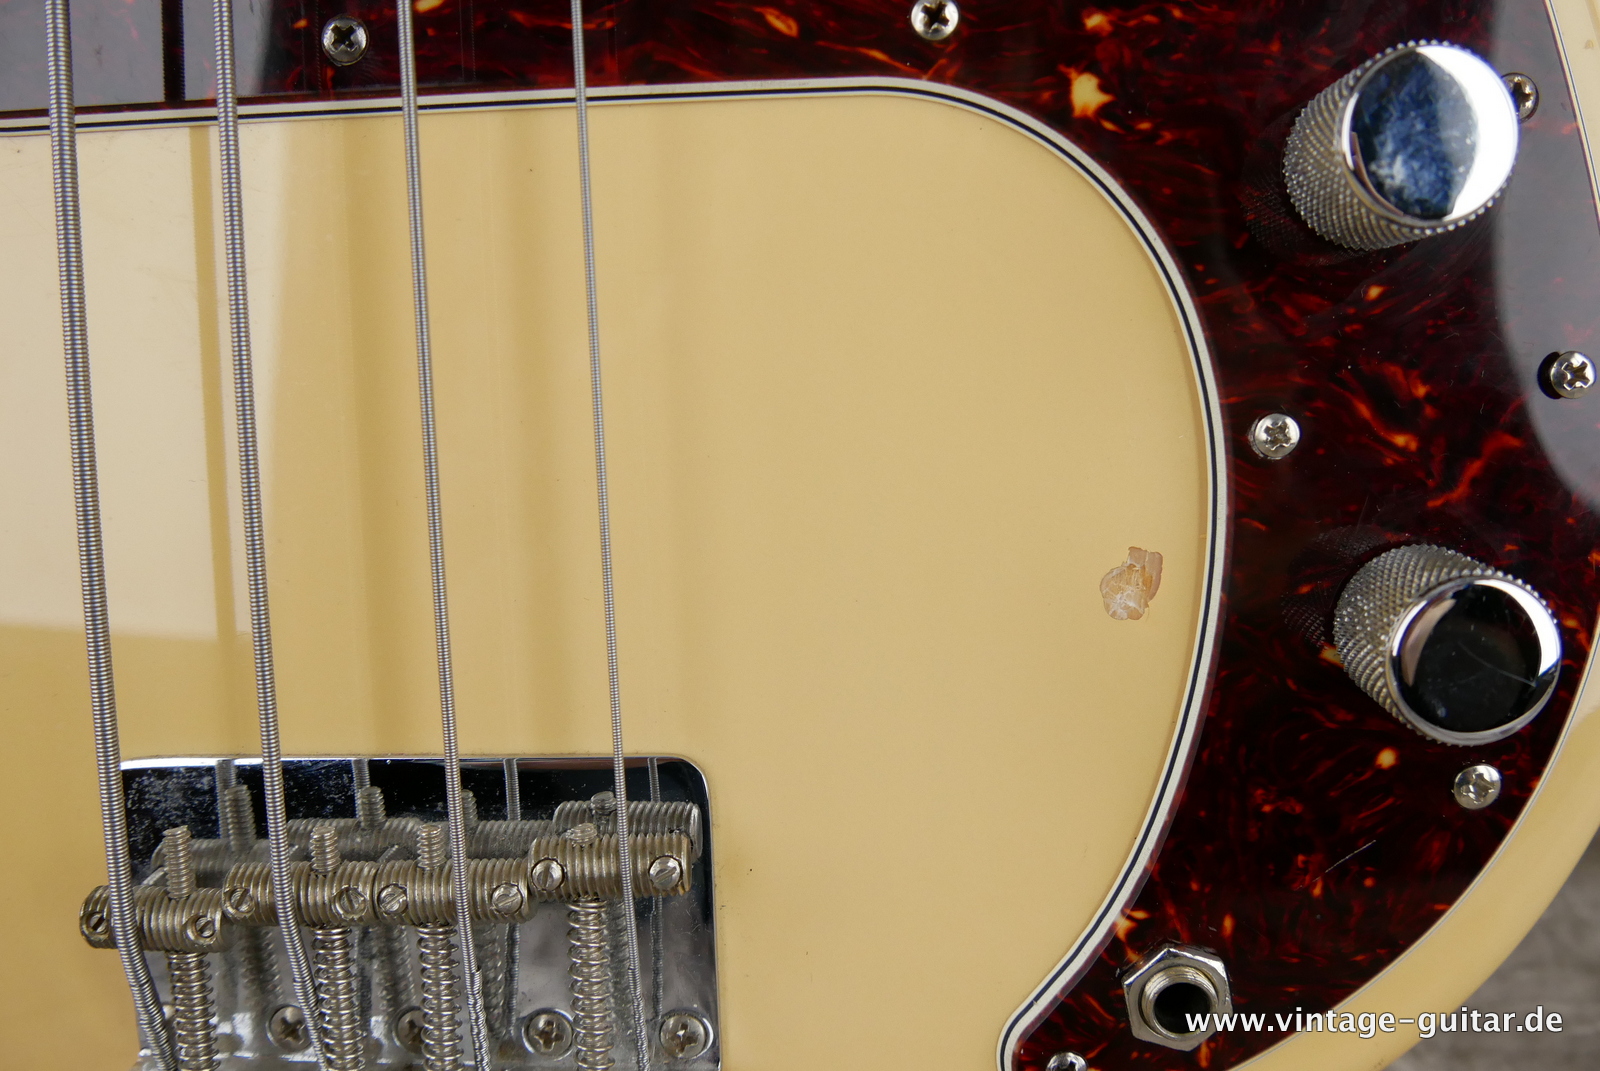 Fender-precision-mexico-2009-beige-014.JPG